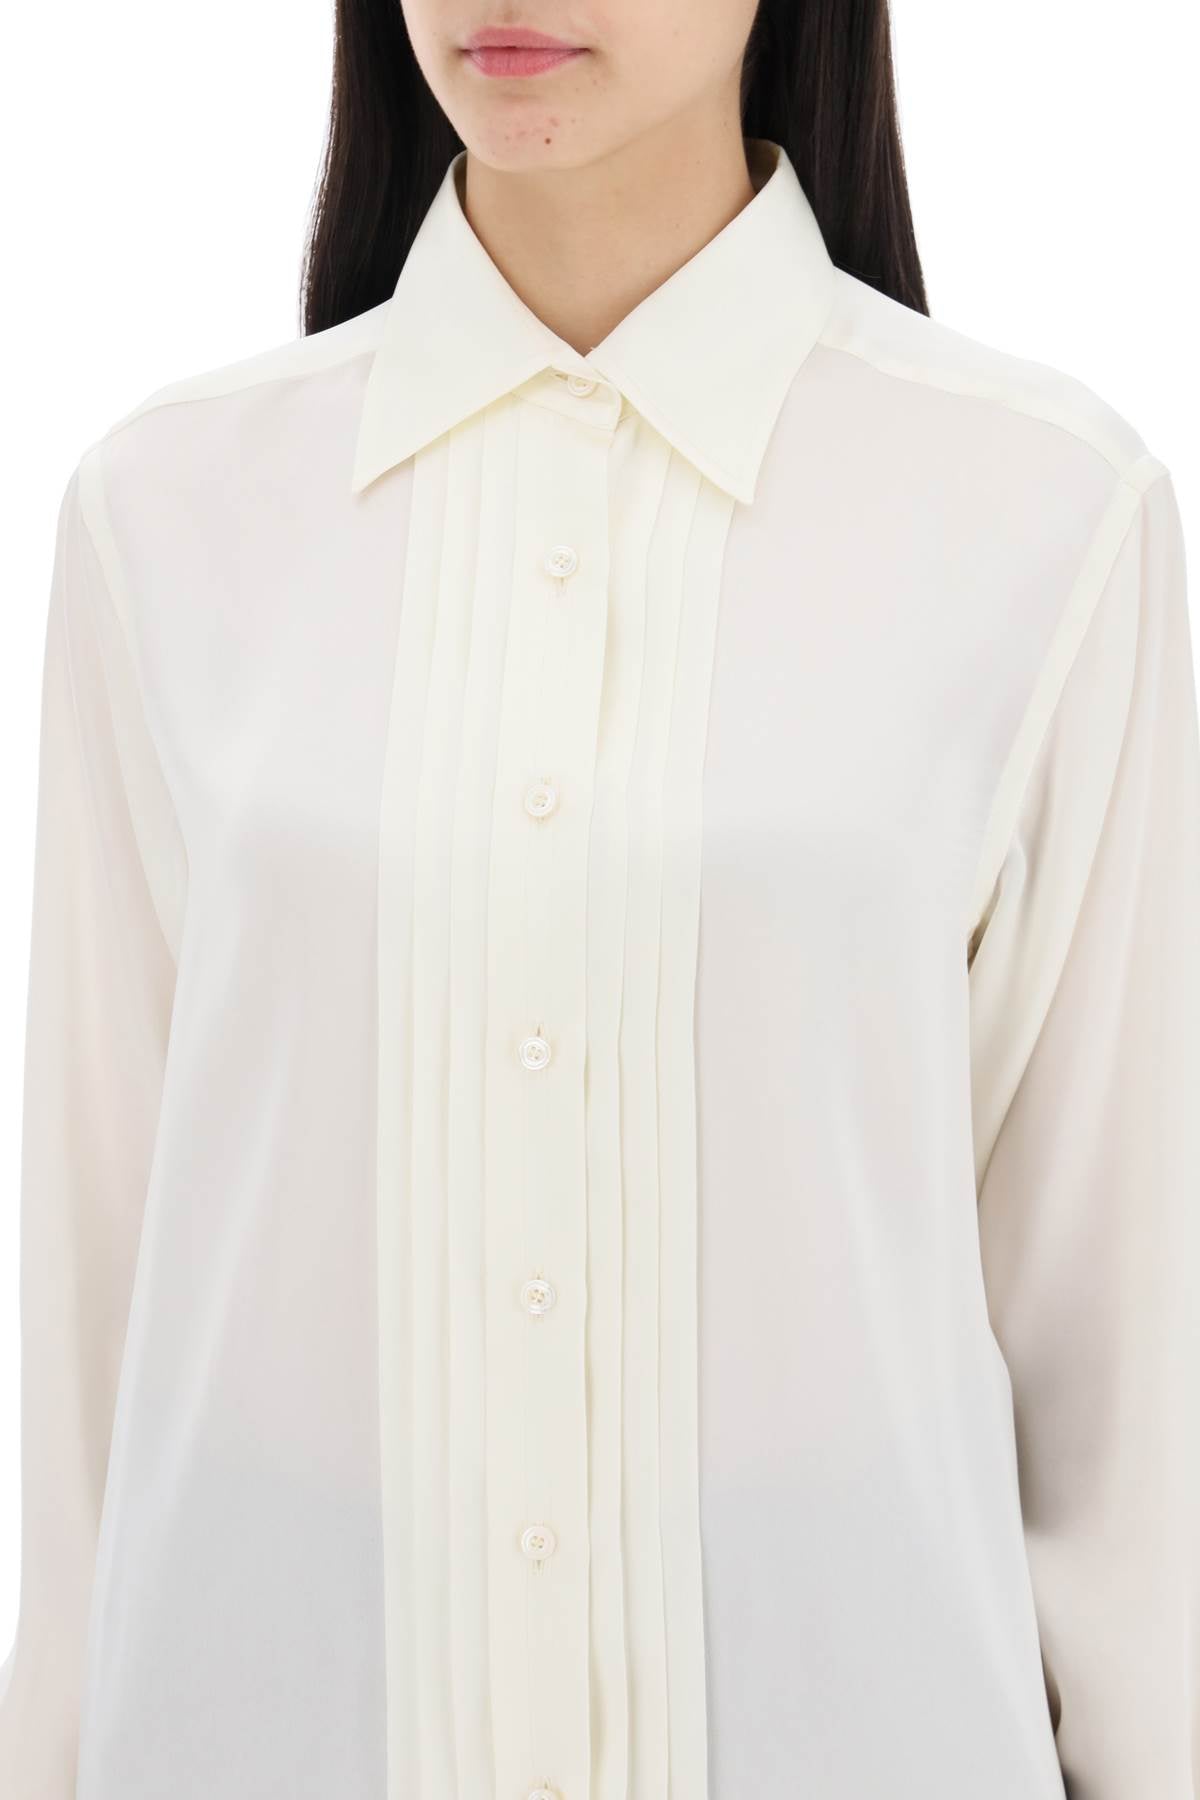 Tom ford silk charmeuse blouse shirt-3